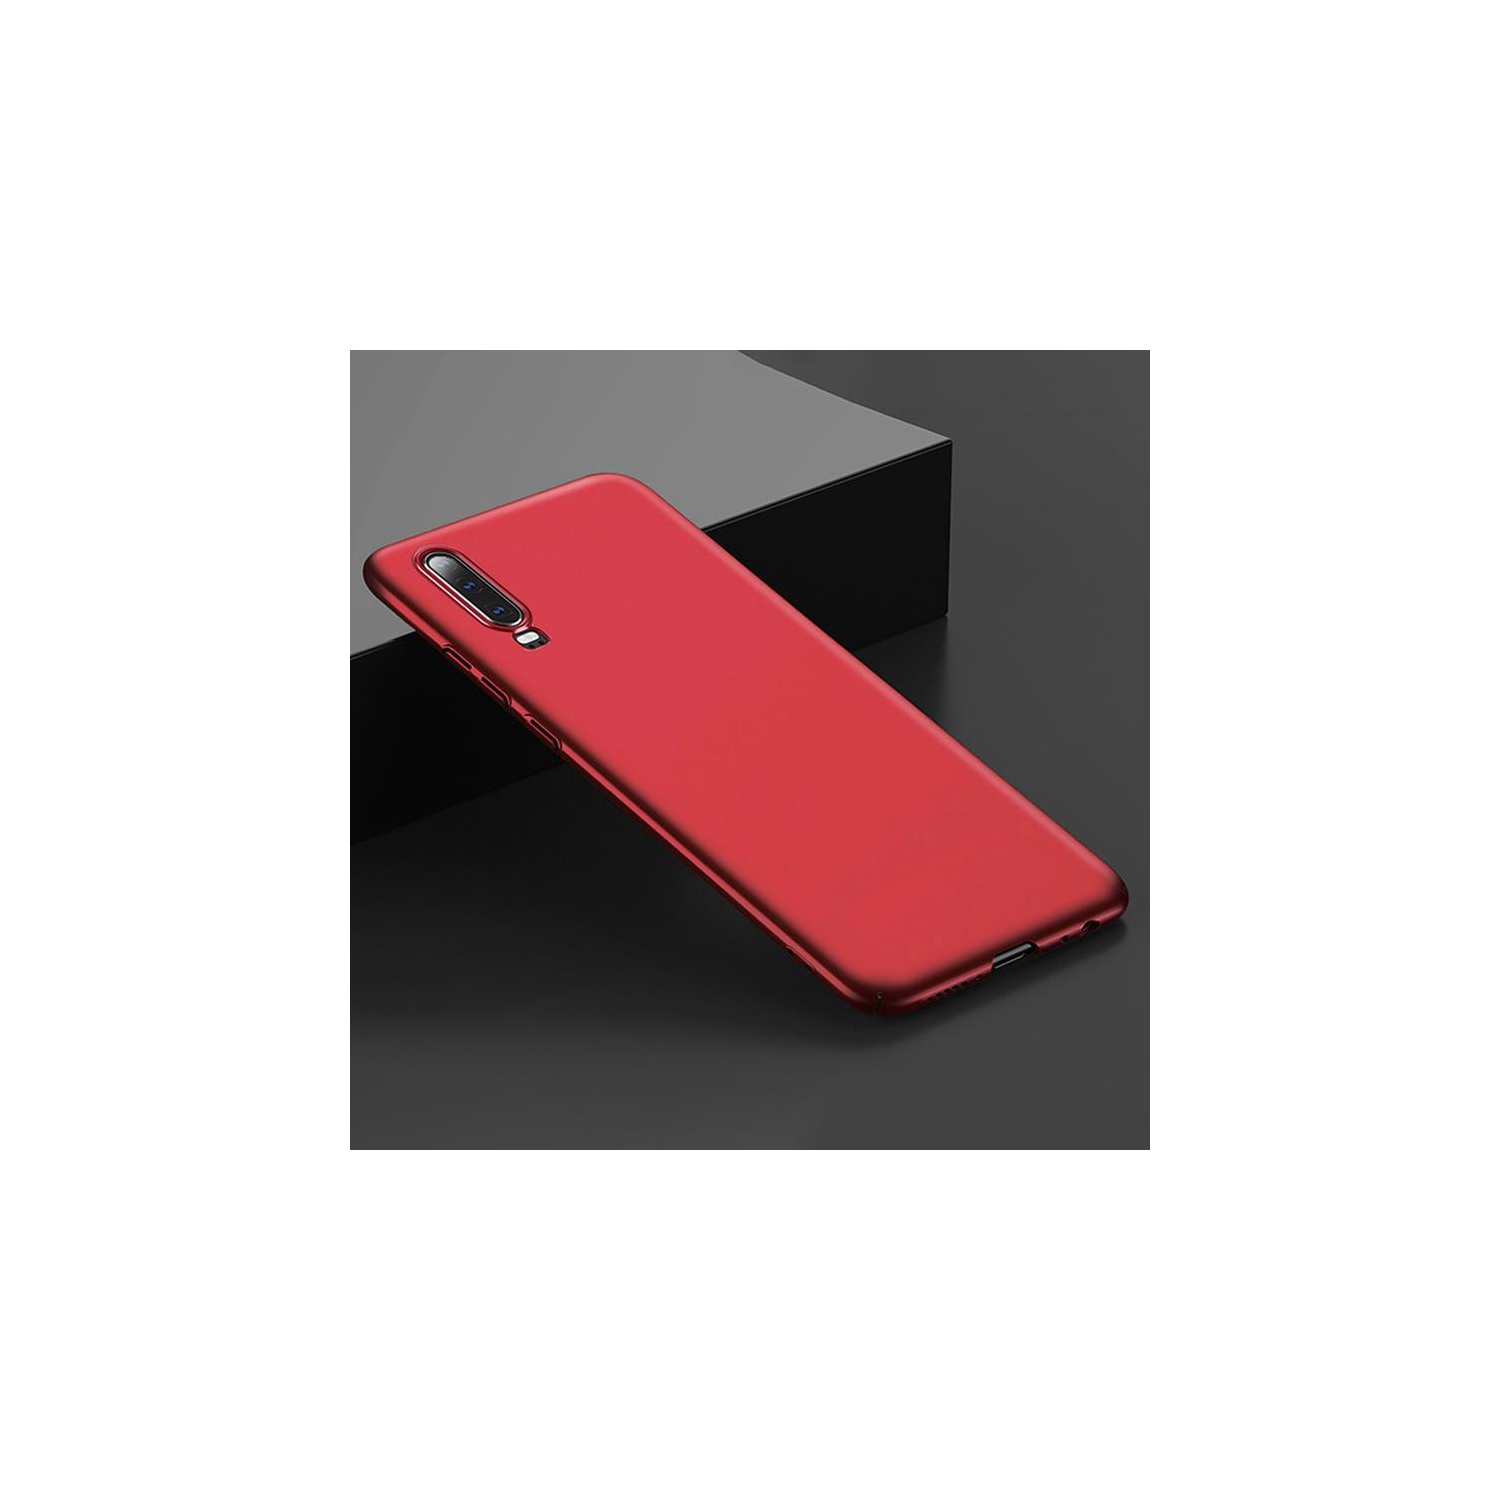 PANDACO Hard Shell Metallic Red Case for Huawei P30